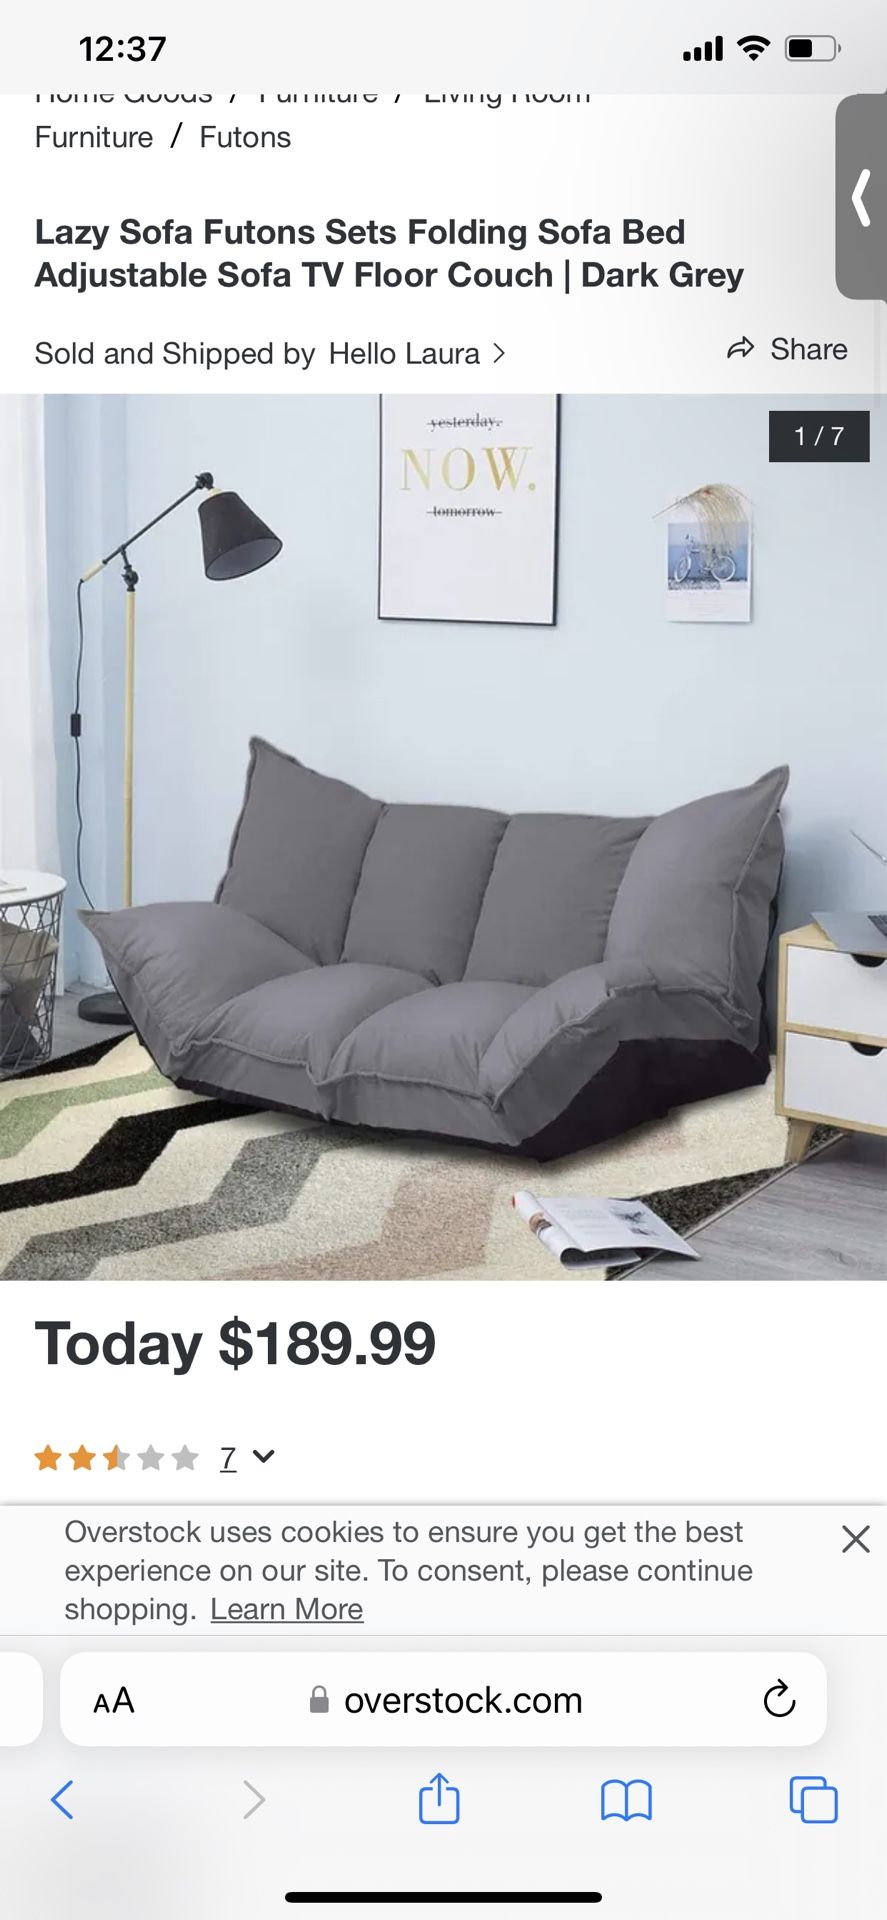 New！Lazy Sofa Futons Sets Folding Sofa Bed Adjustable Sofa TV Floor Couch | Dark Grey